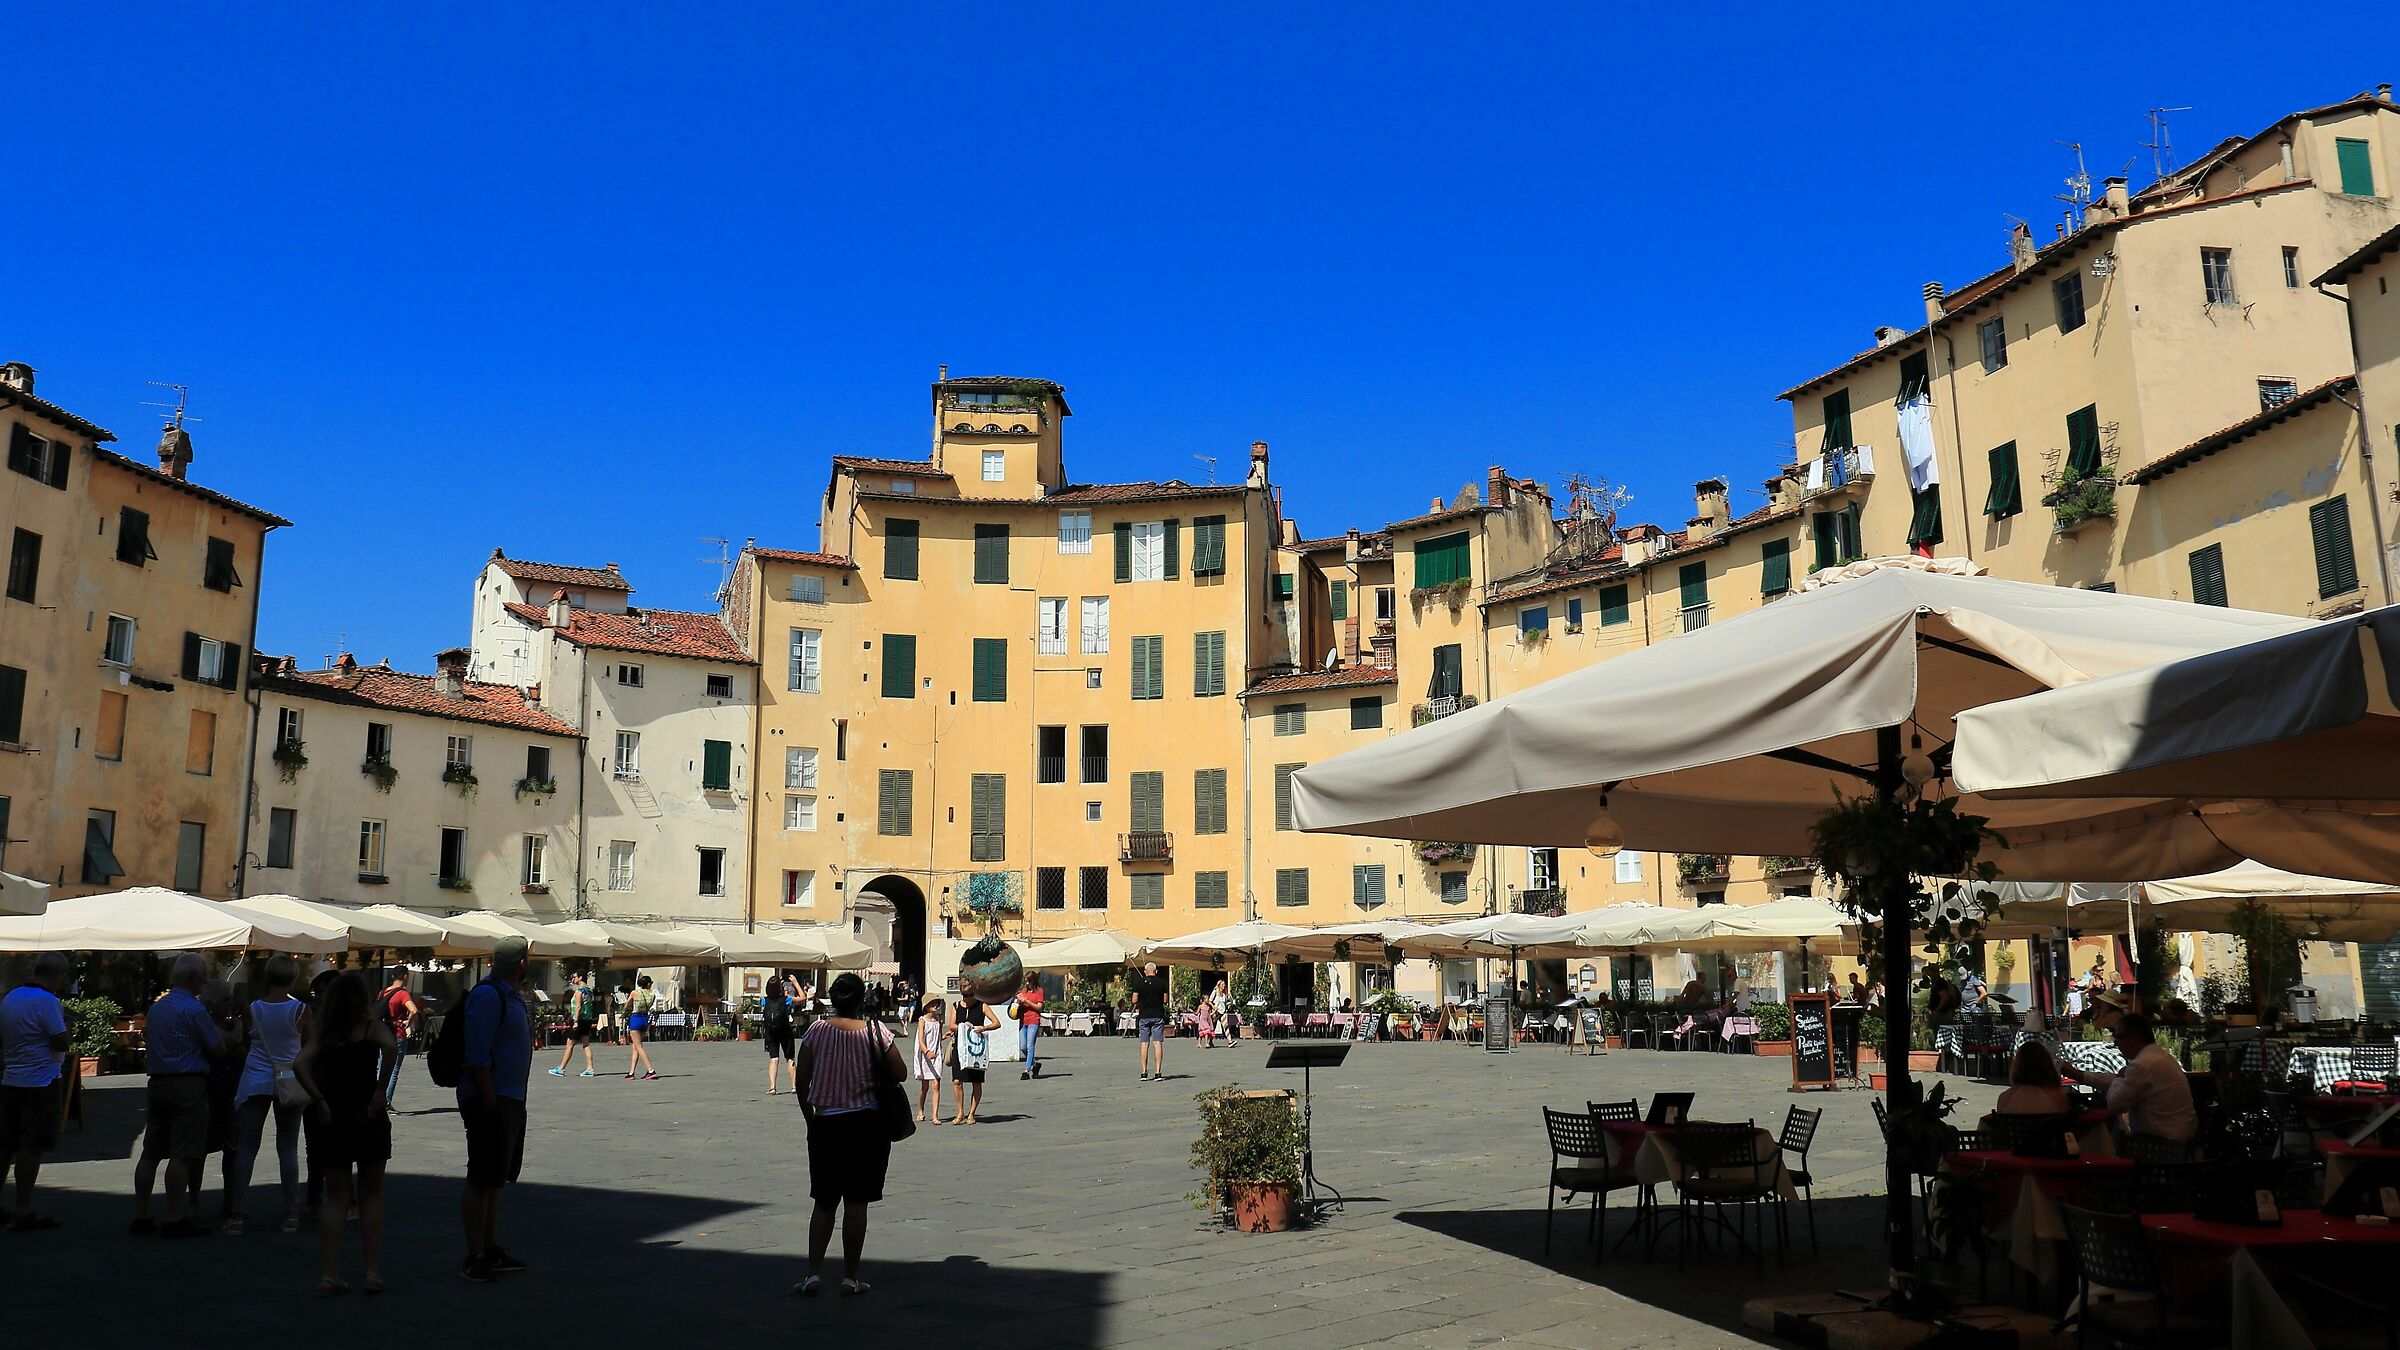 Piazza ANfiteatro in Lucca...